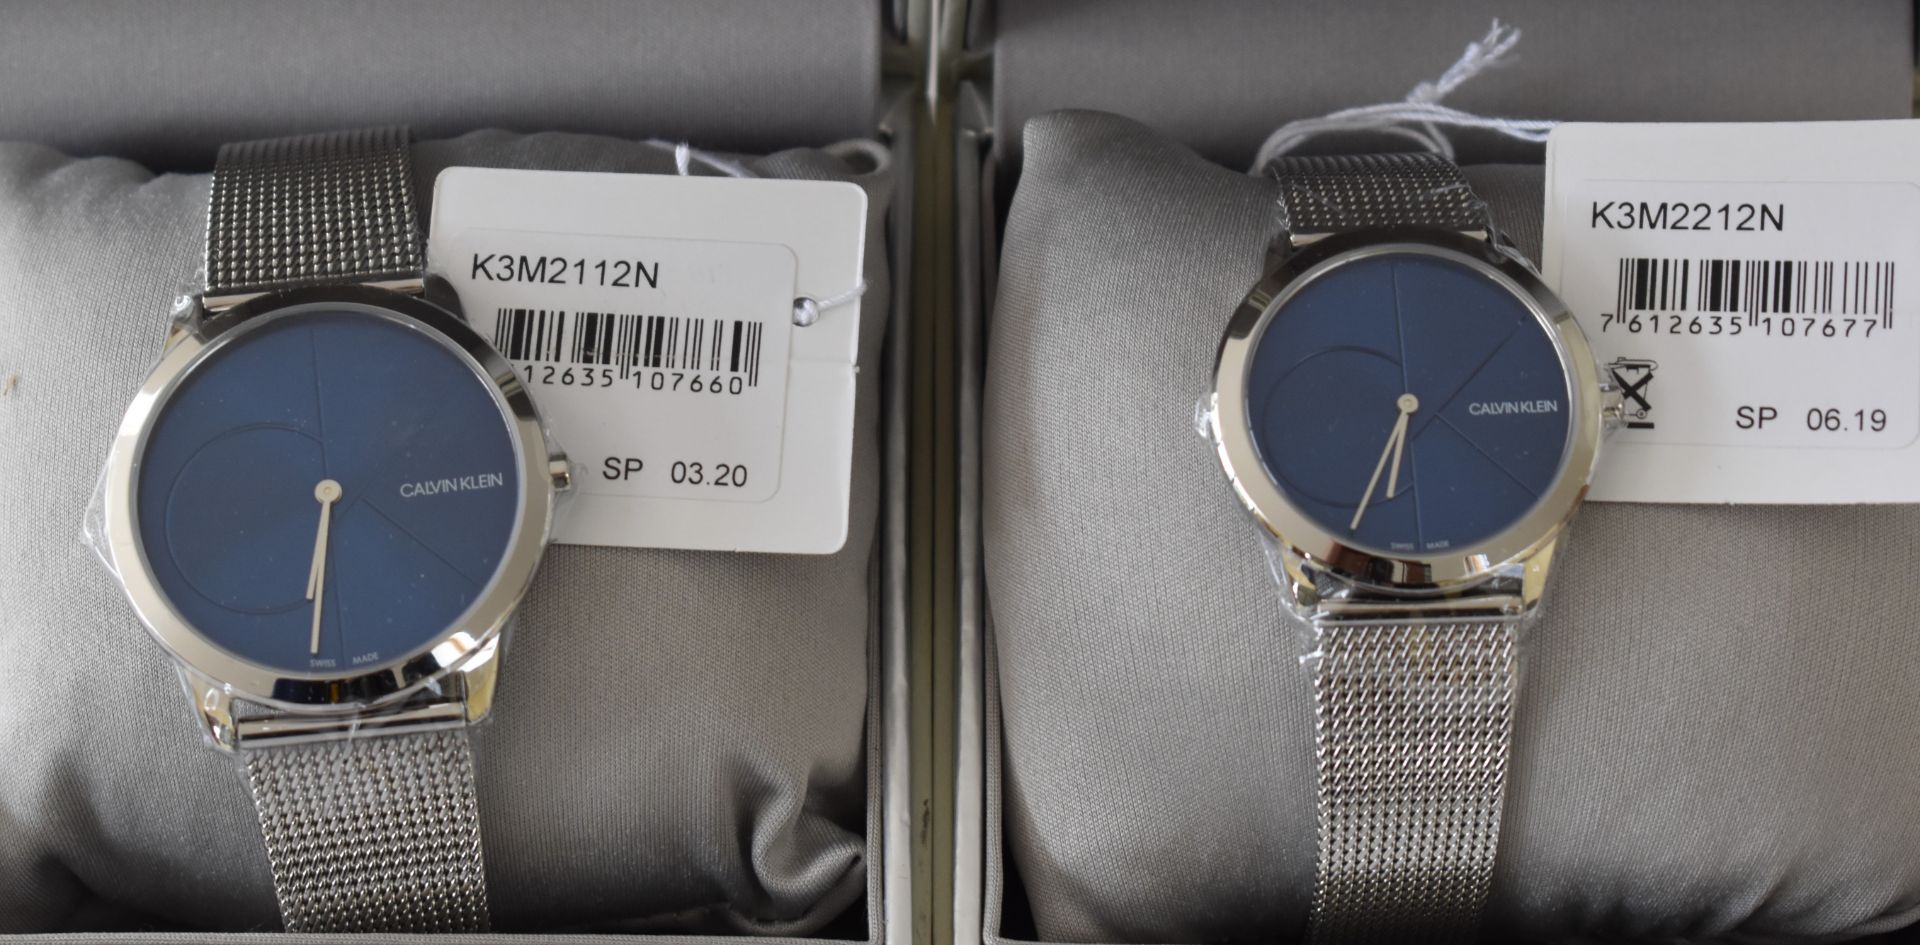 Calvin Klein His/Her K3M2112N/K3M2212N Watches